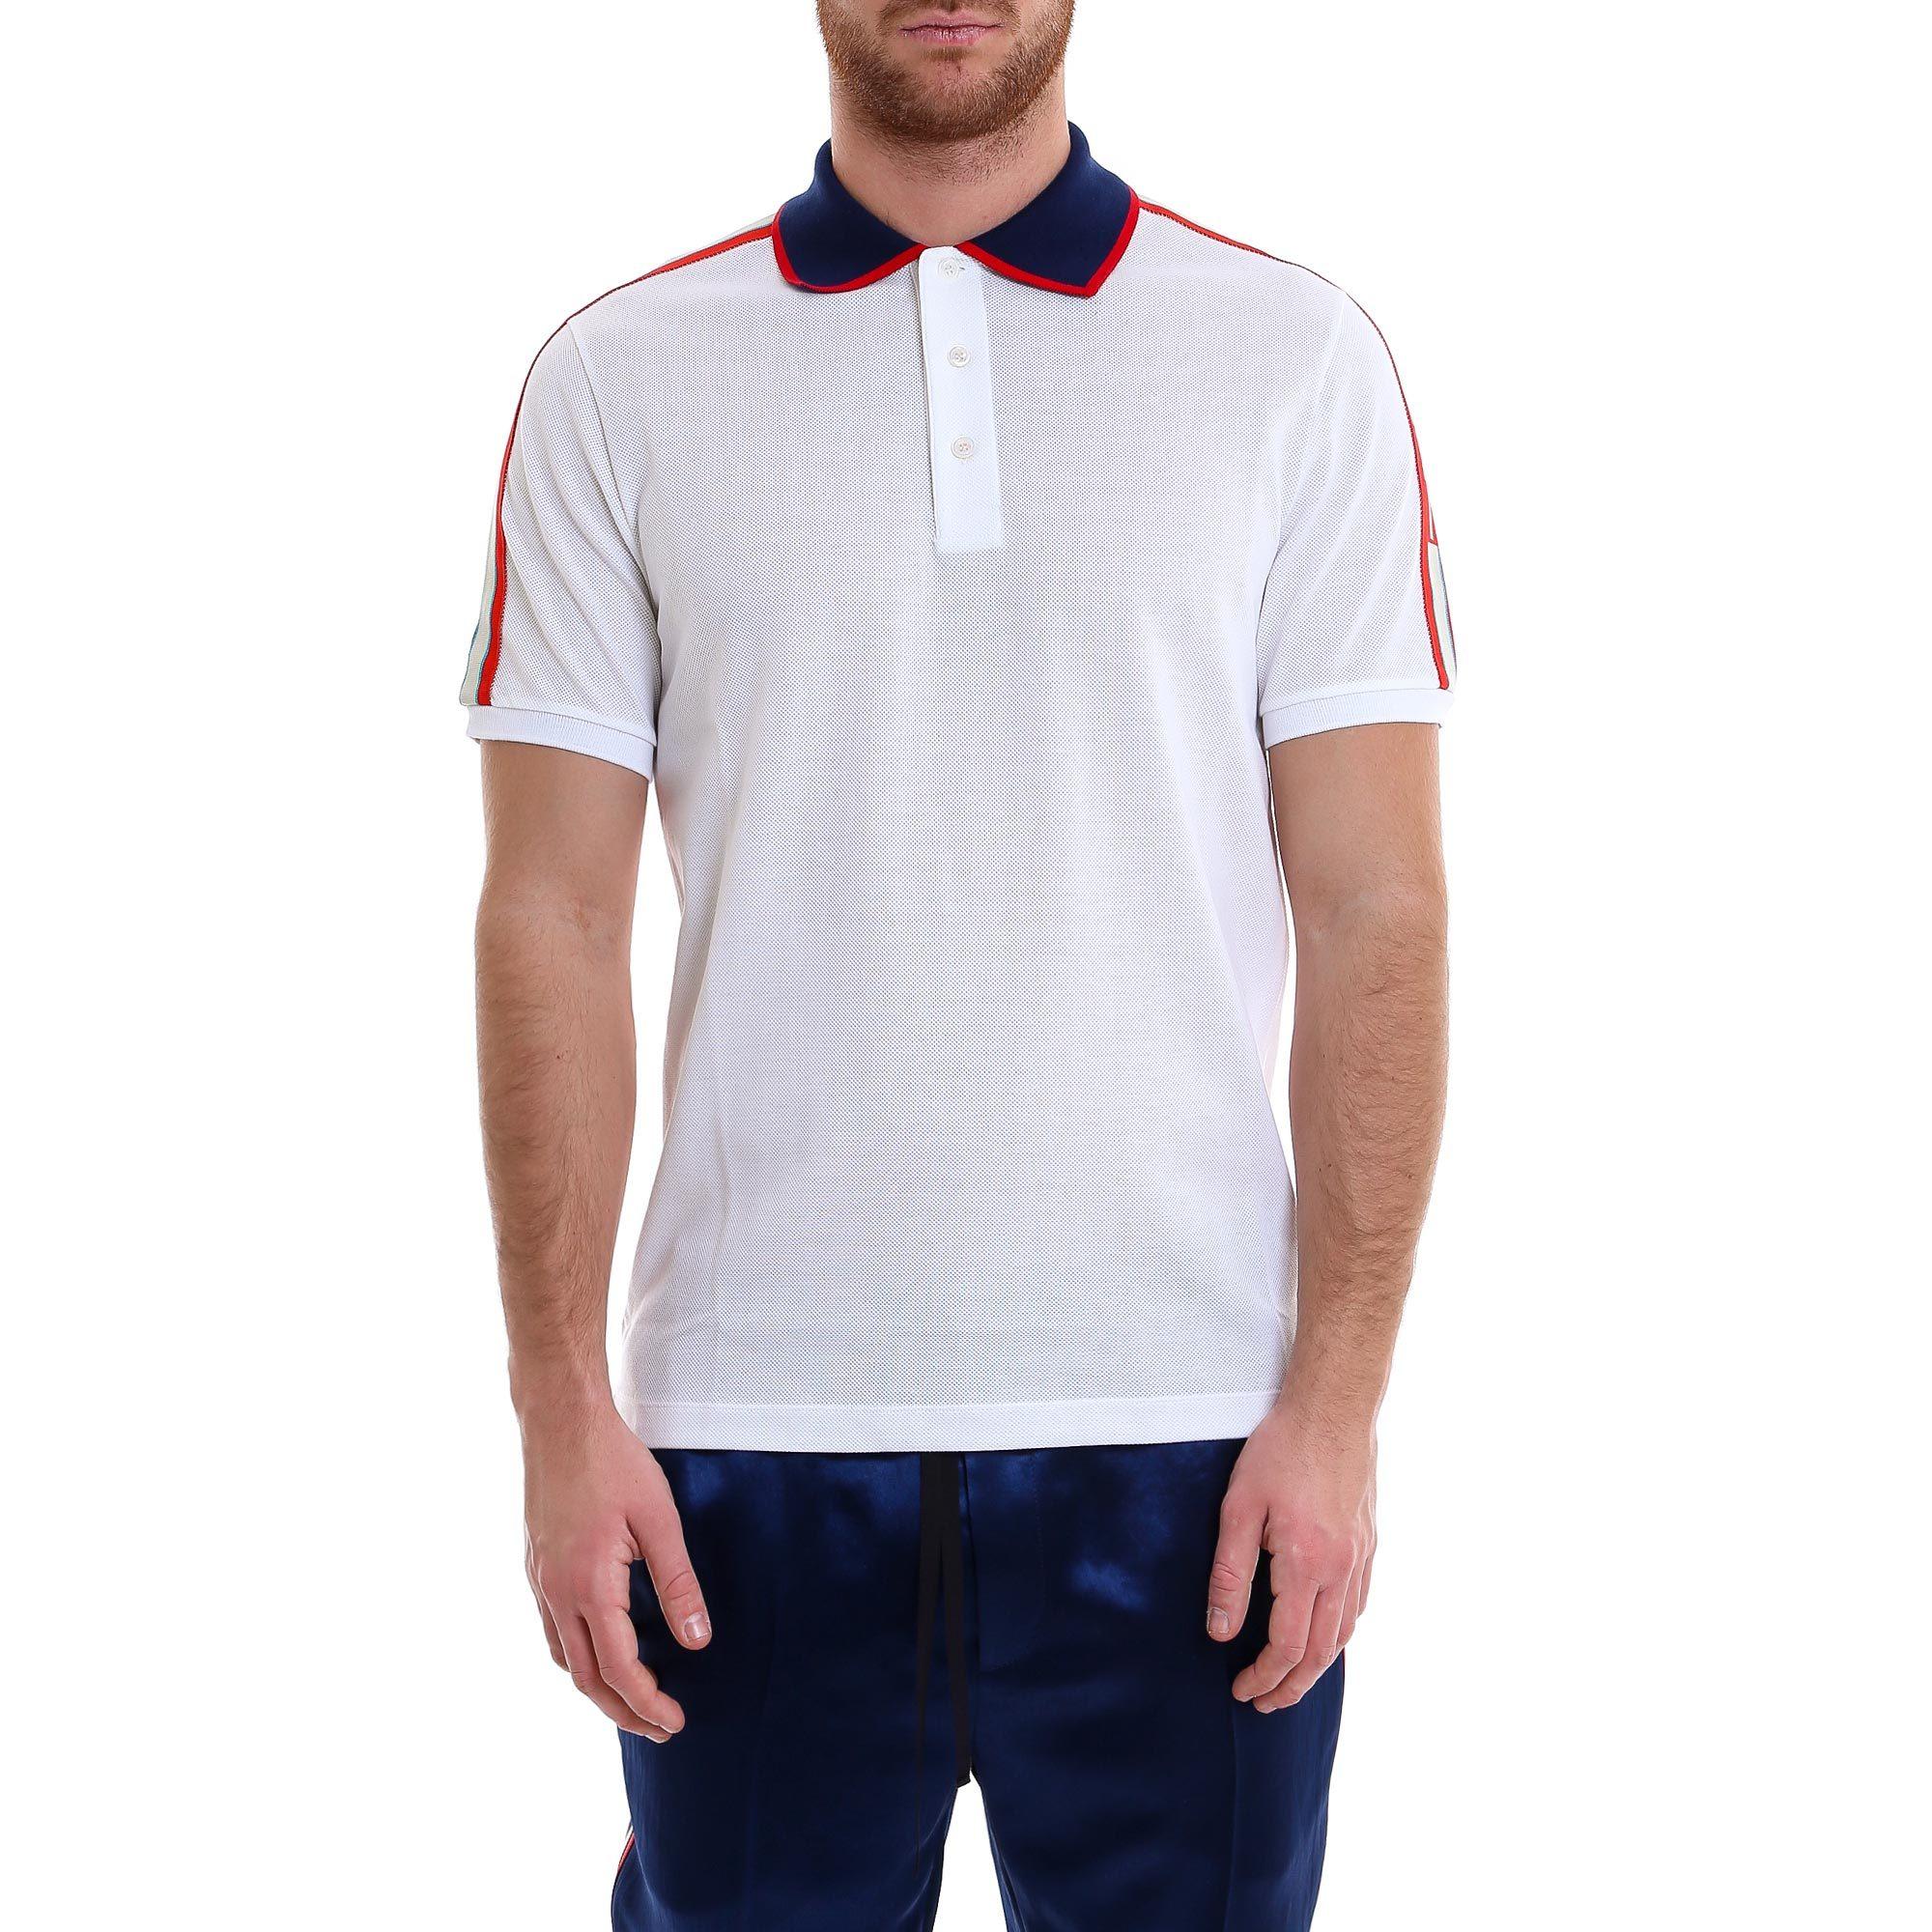 Gucci Logo Ribbon Polo Shirt in White for Men - Lyst